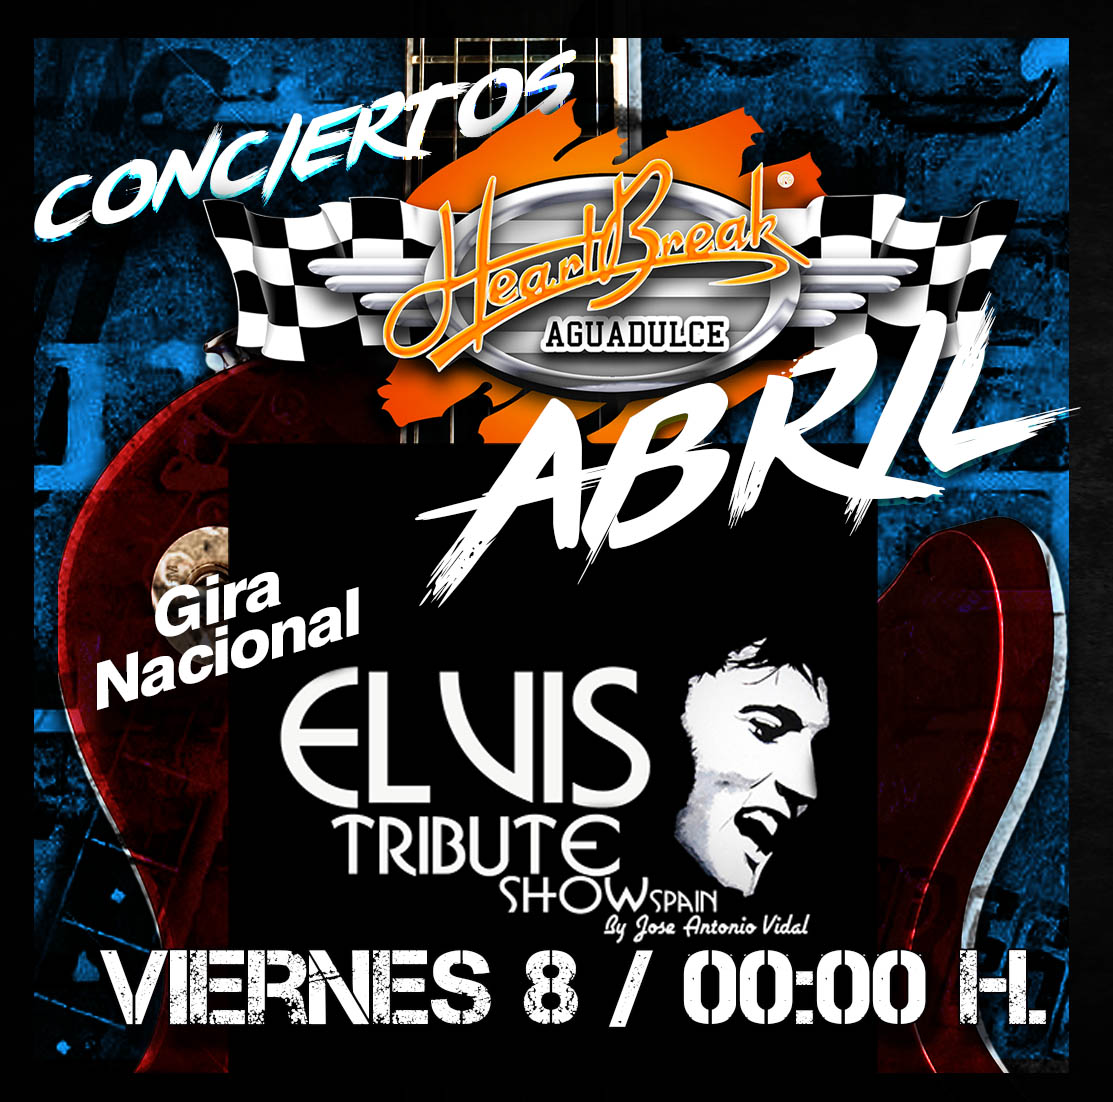 Concierto de Elvis Tribute Show